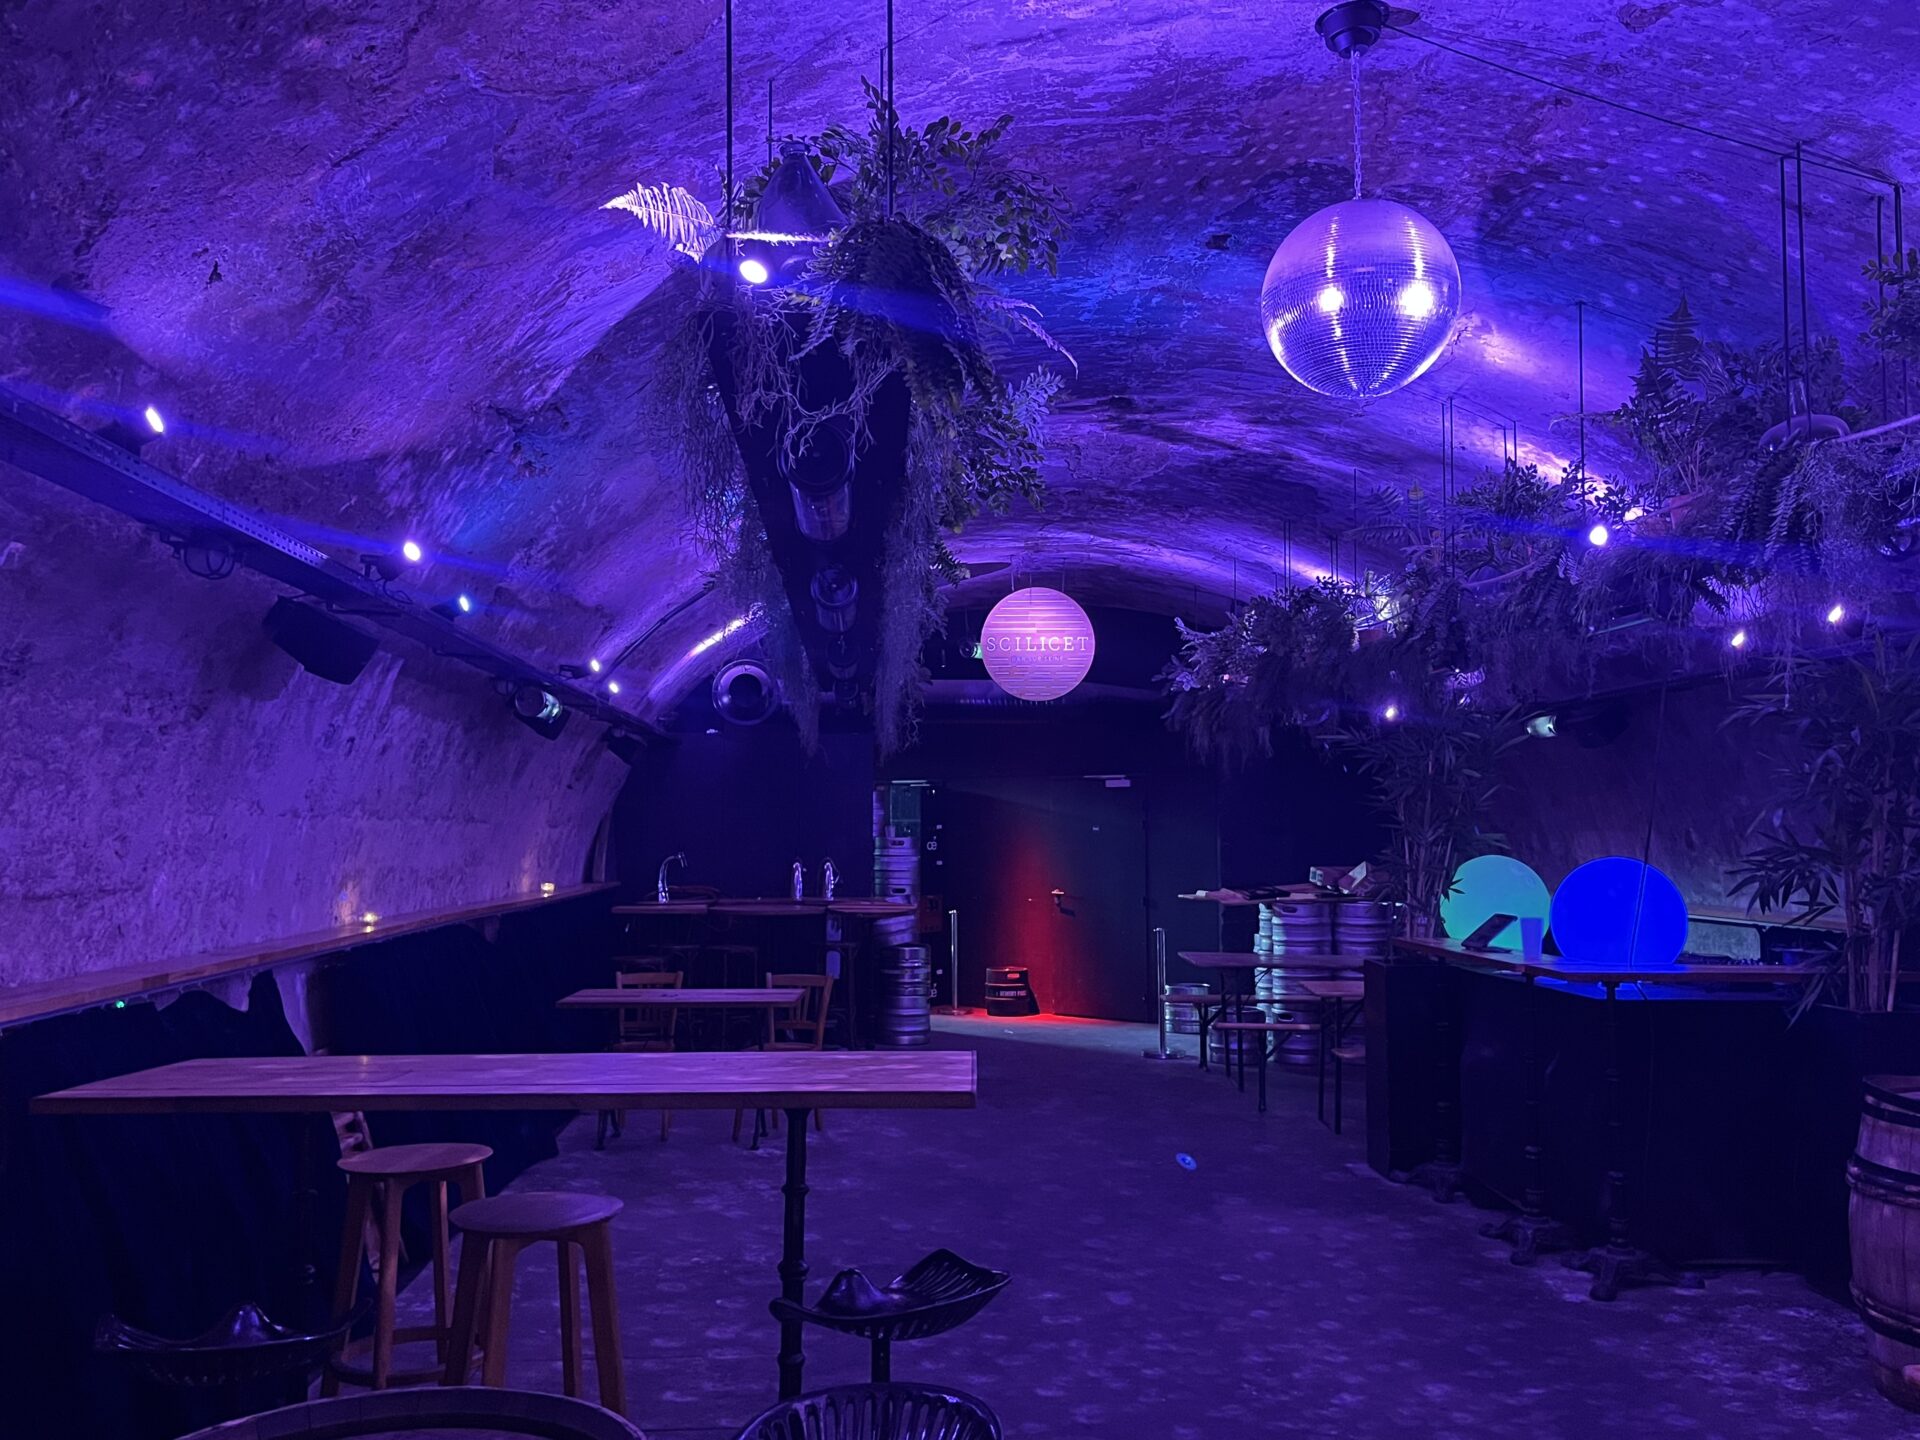 Underground bar with disco balls and neon lighting.